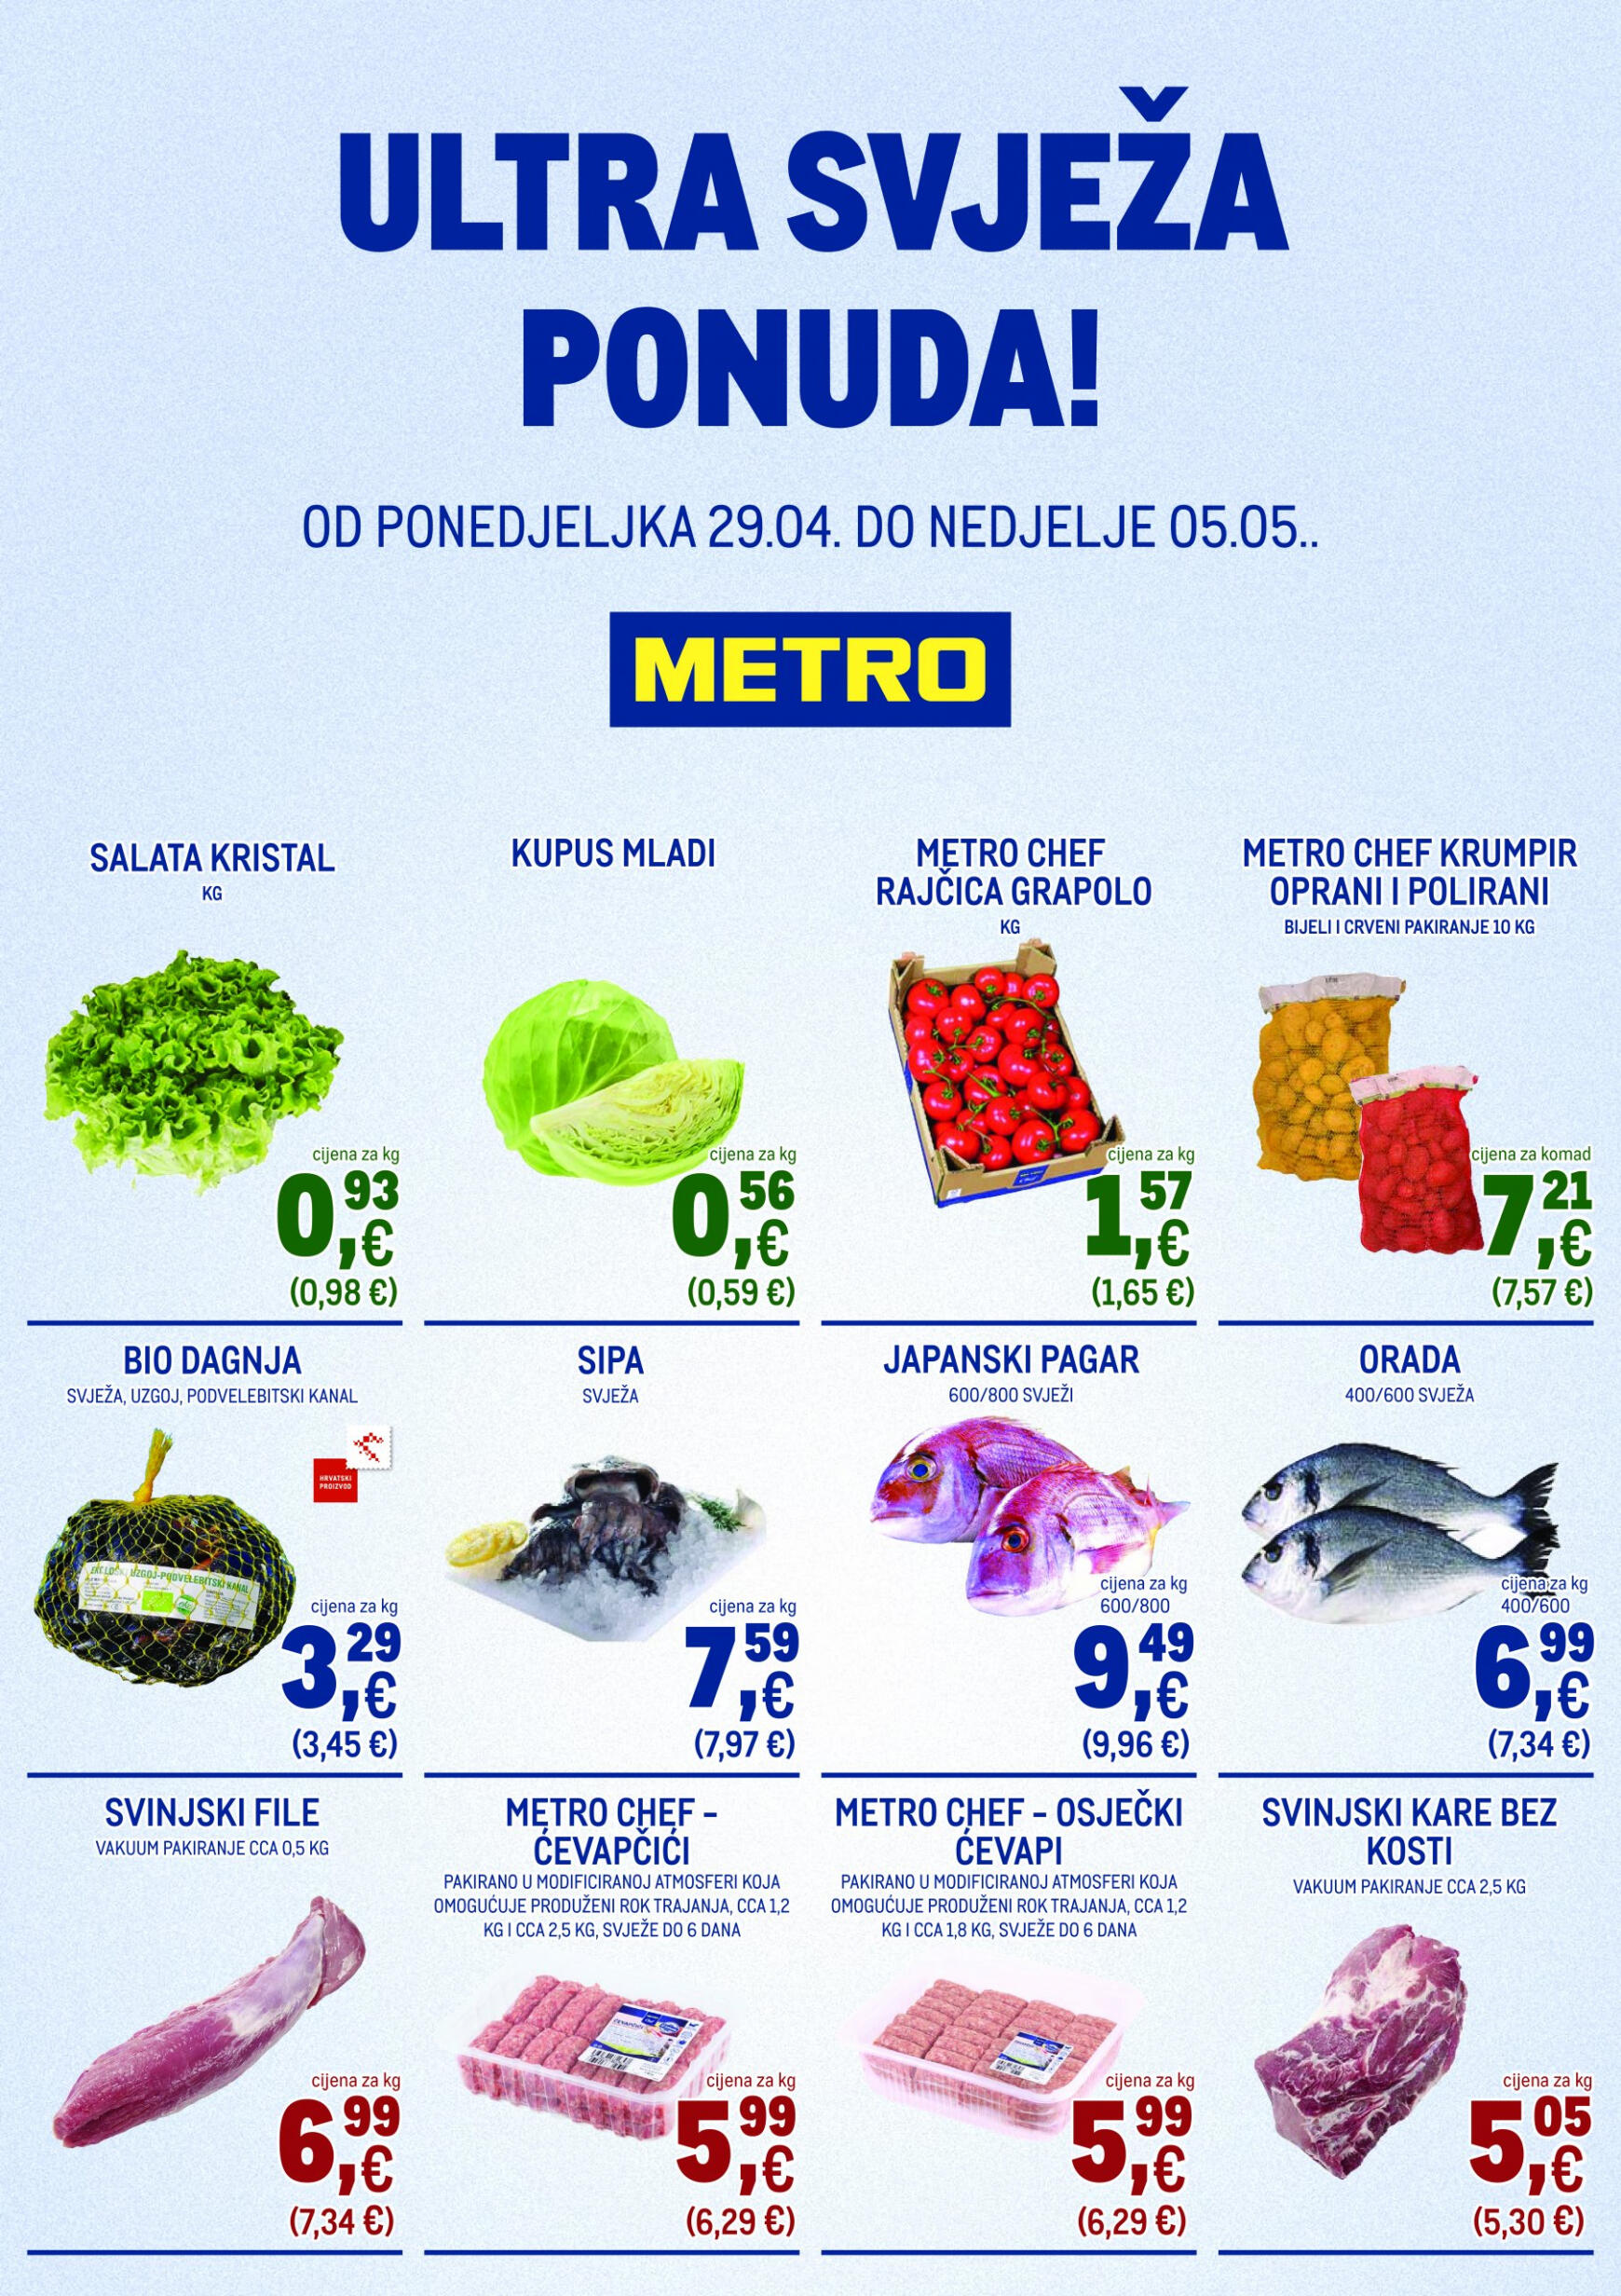 metro - Novi katalog Metro - Ultra svježa ponuda 29.04. - 05.05.